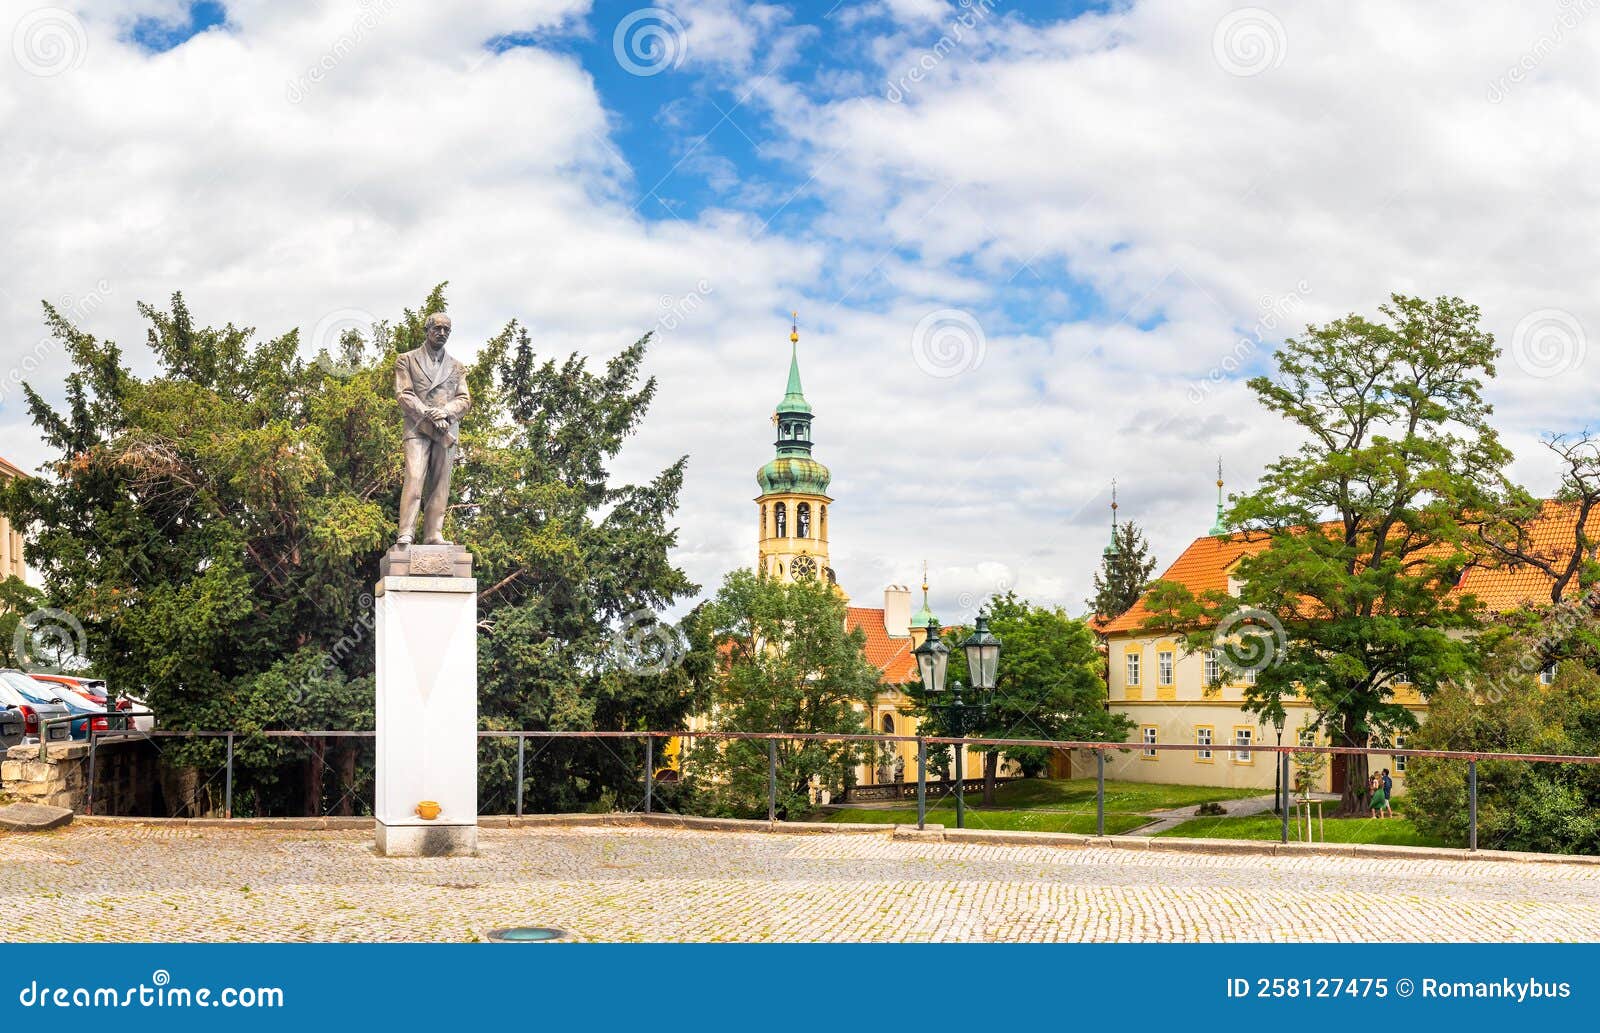 statue, monument to edvard benes on loreto square and tower of loreta monastery church, prague, czech republic